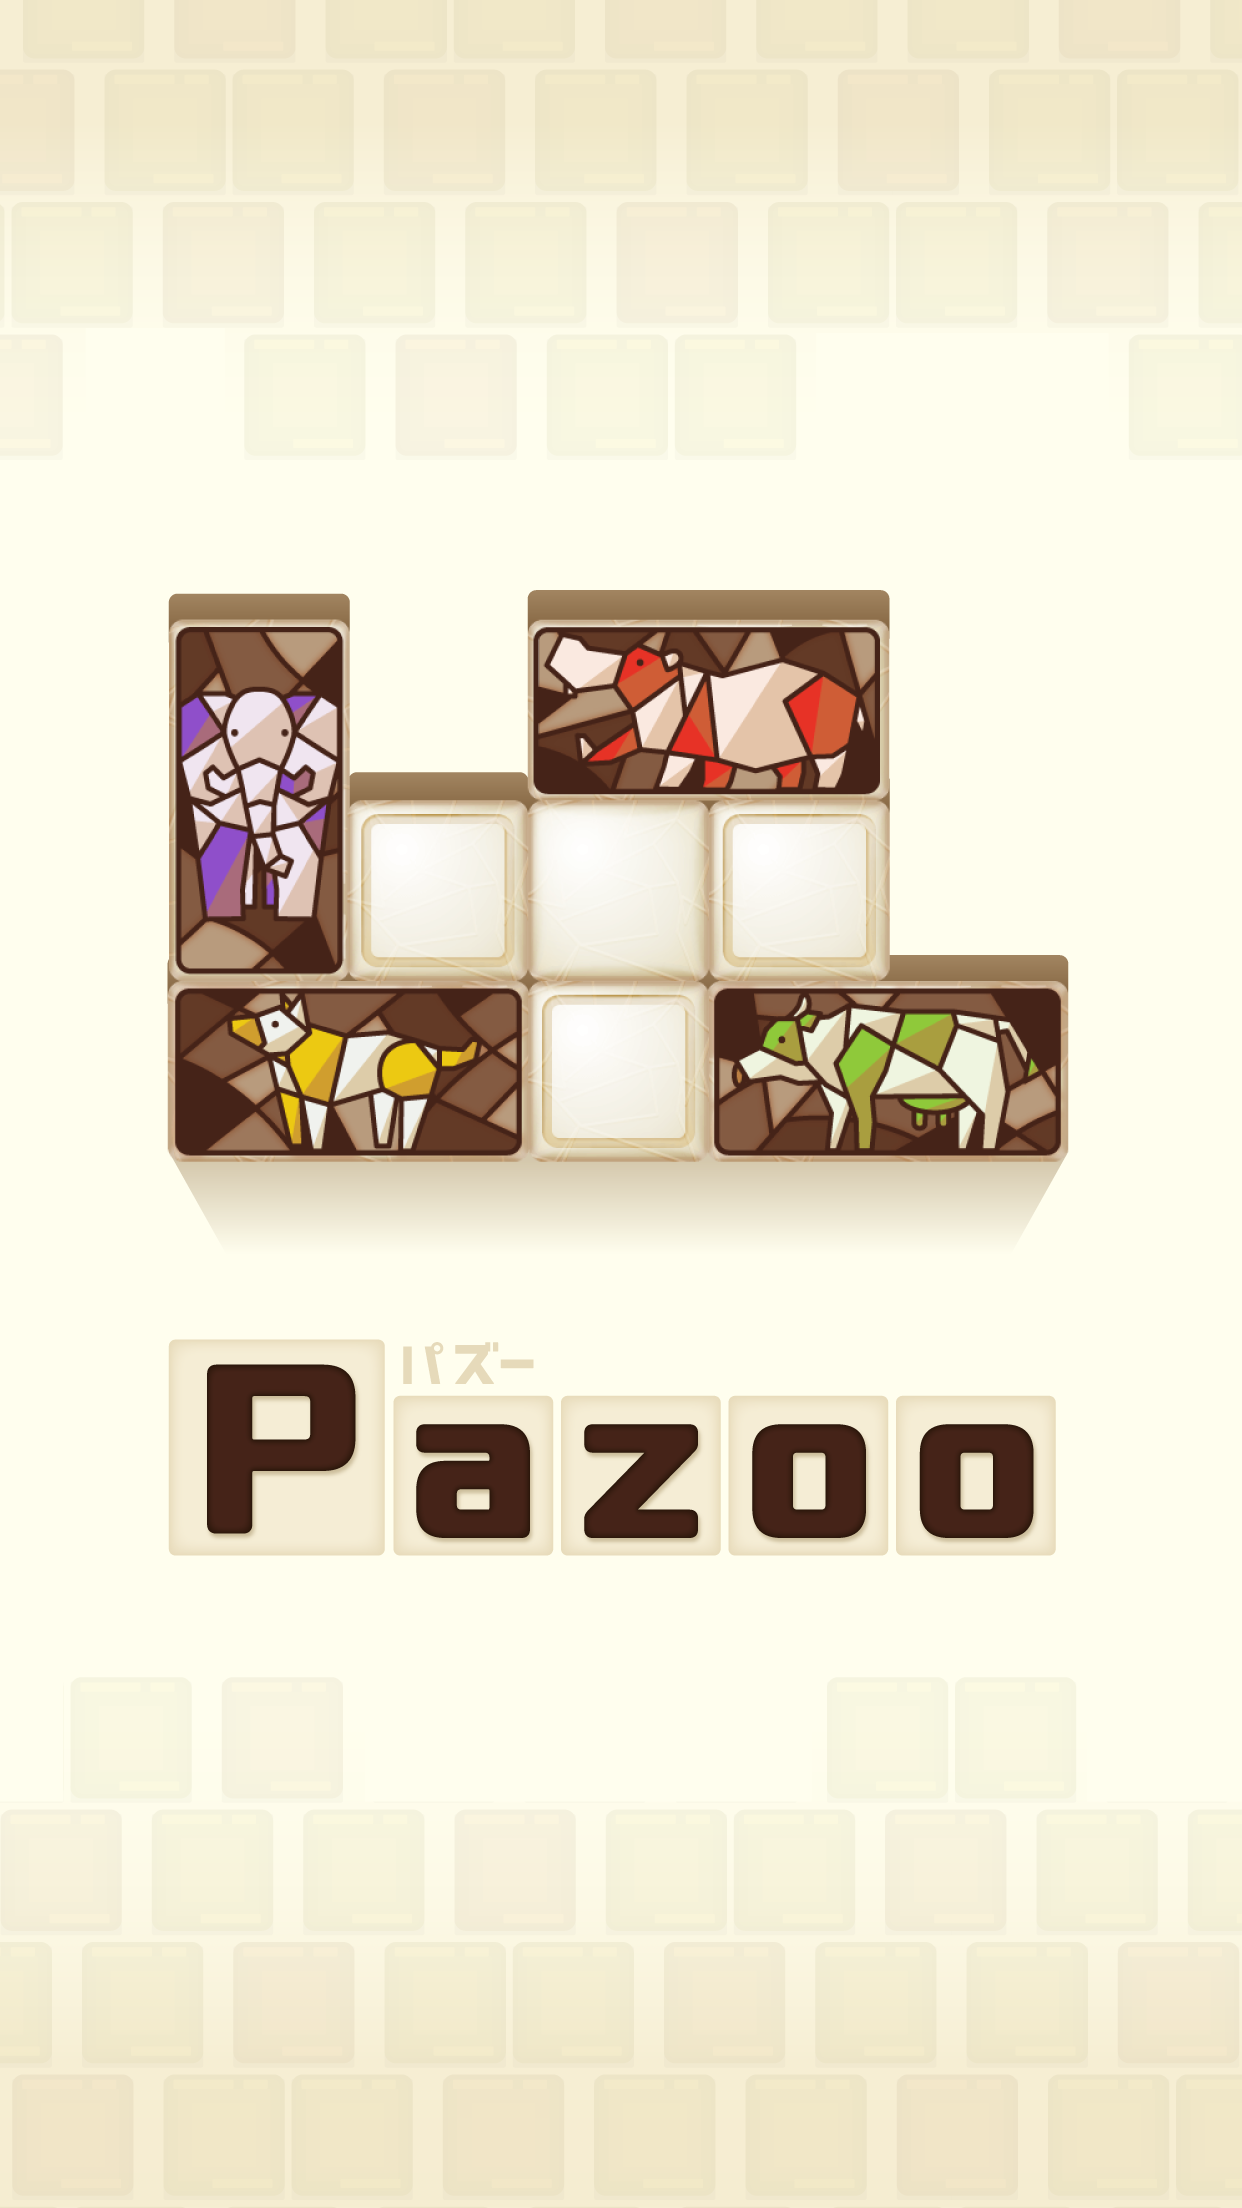 Screenshot 1 of Пазоо - игра-головоломка 1.2.0